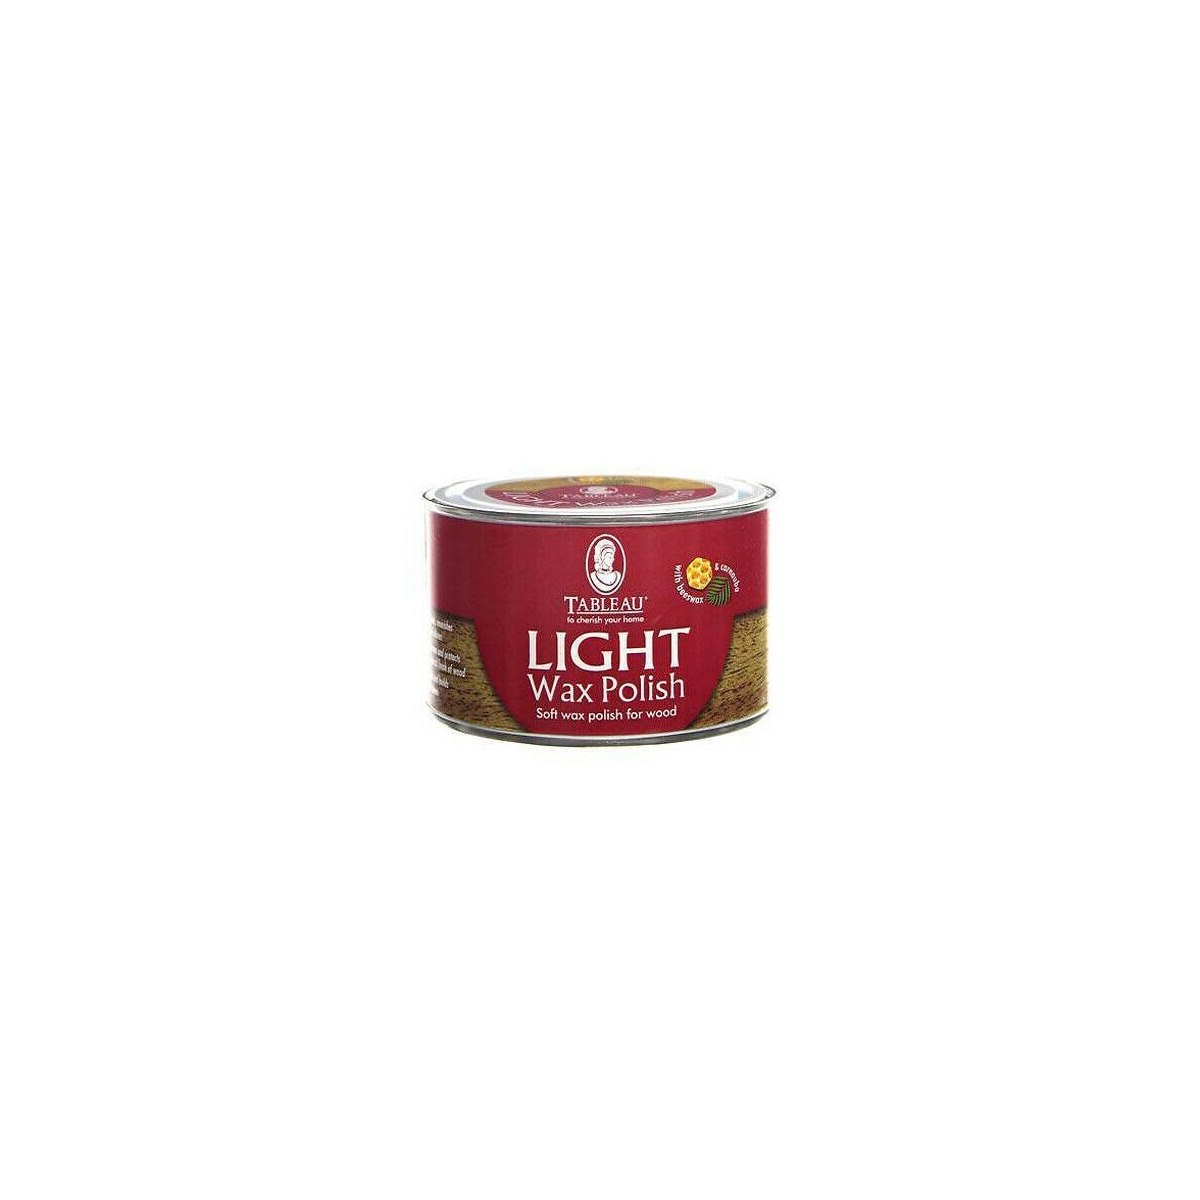 Tableau Light Wax Polish 